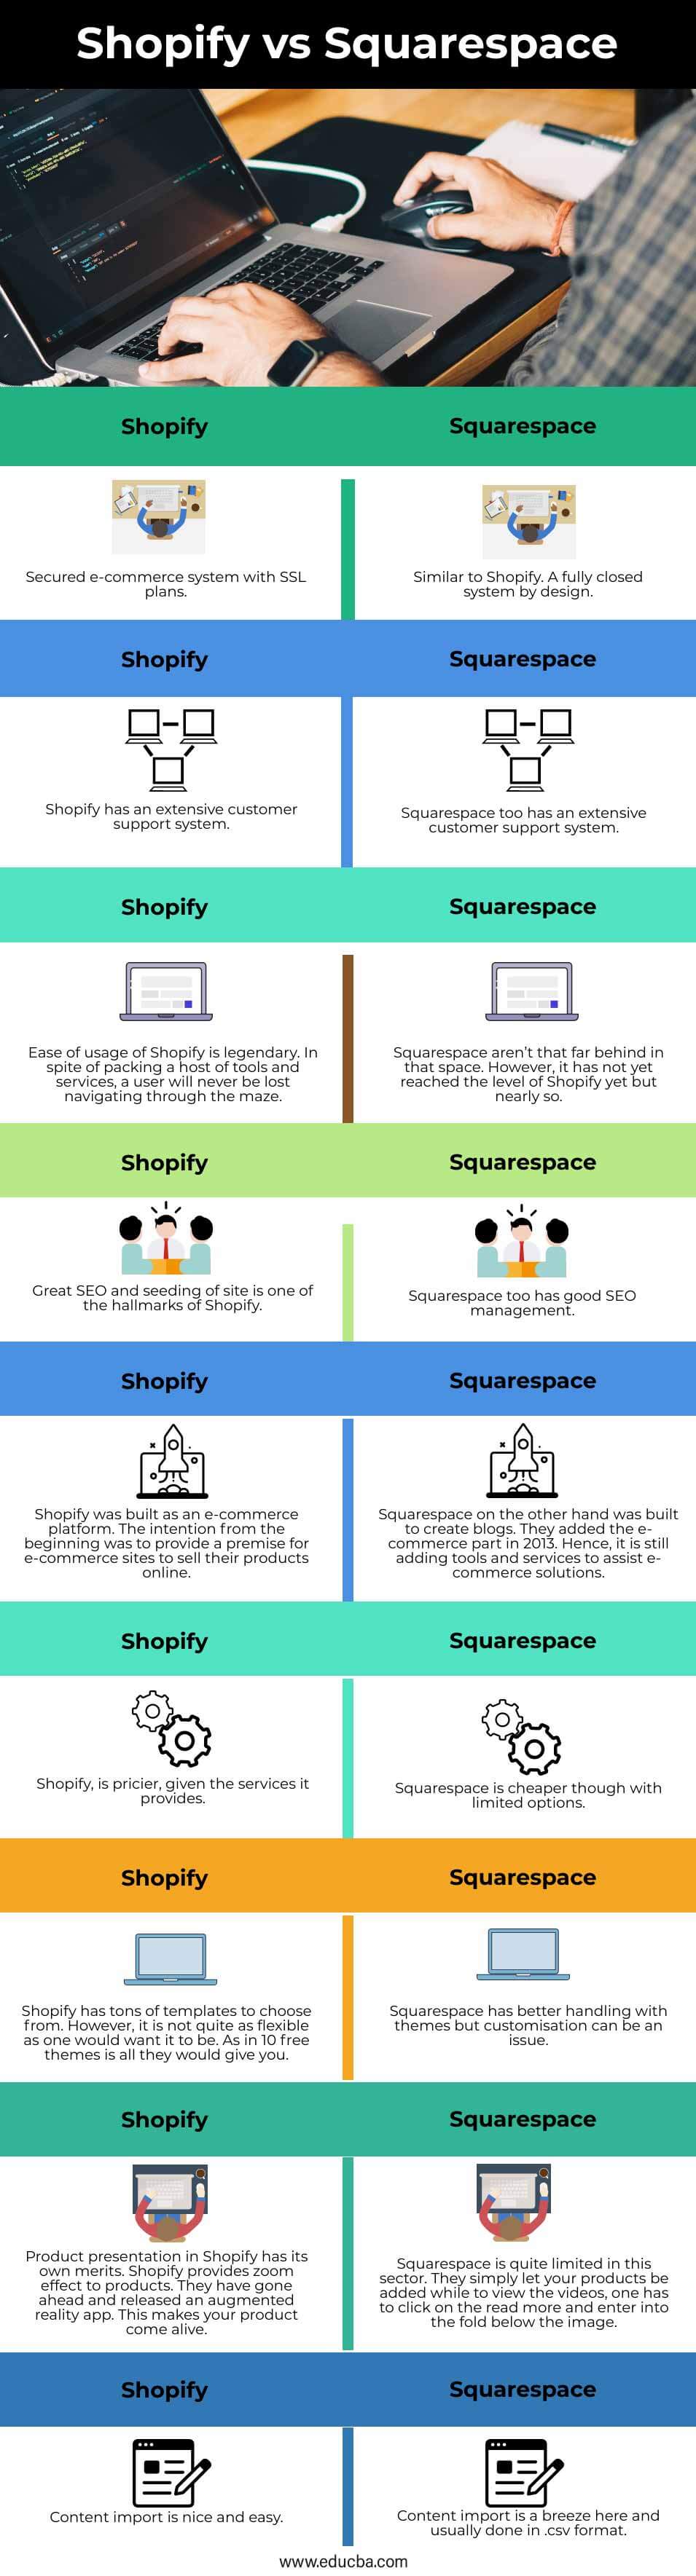 Shopify-vs-Squarespace-info